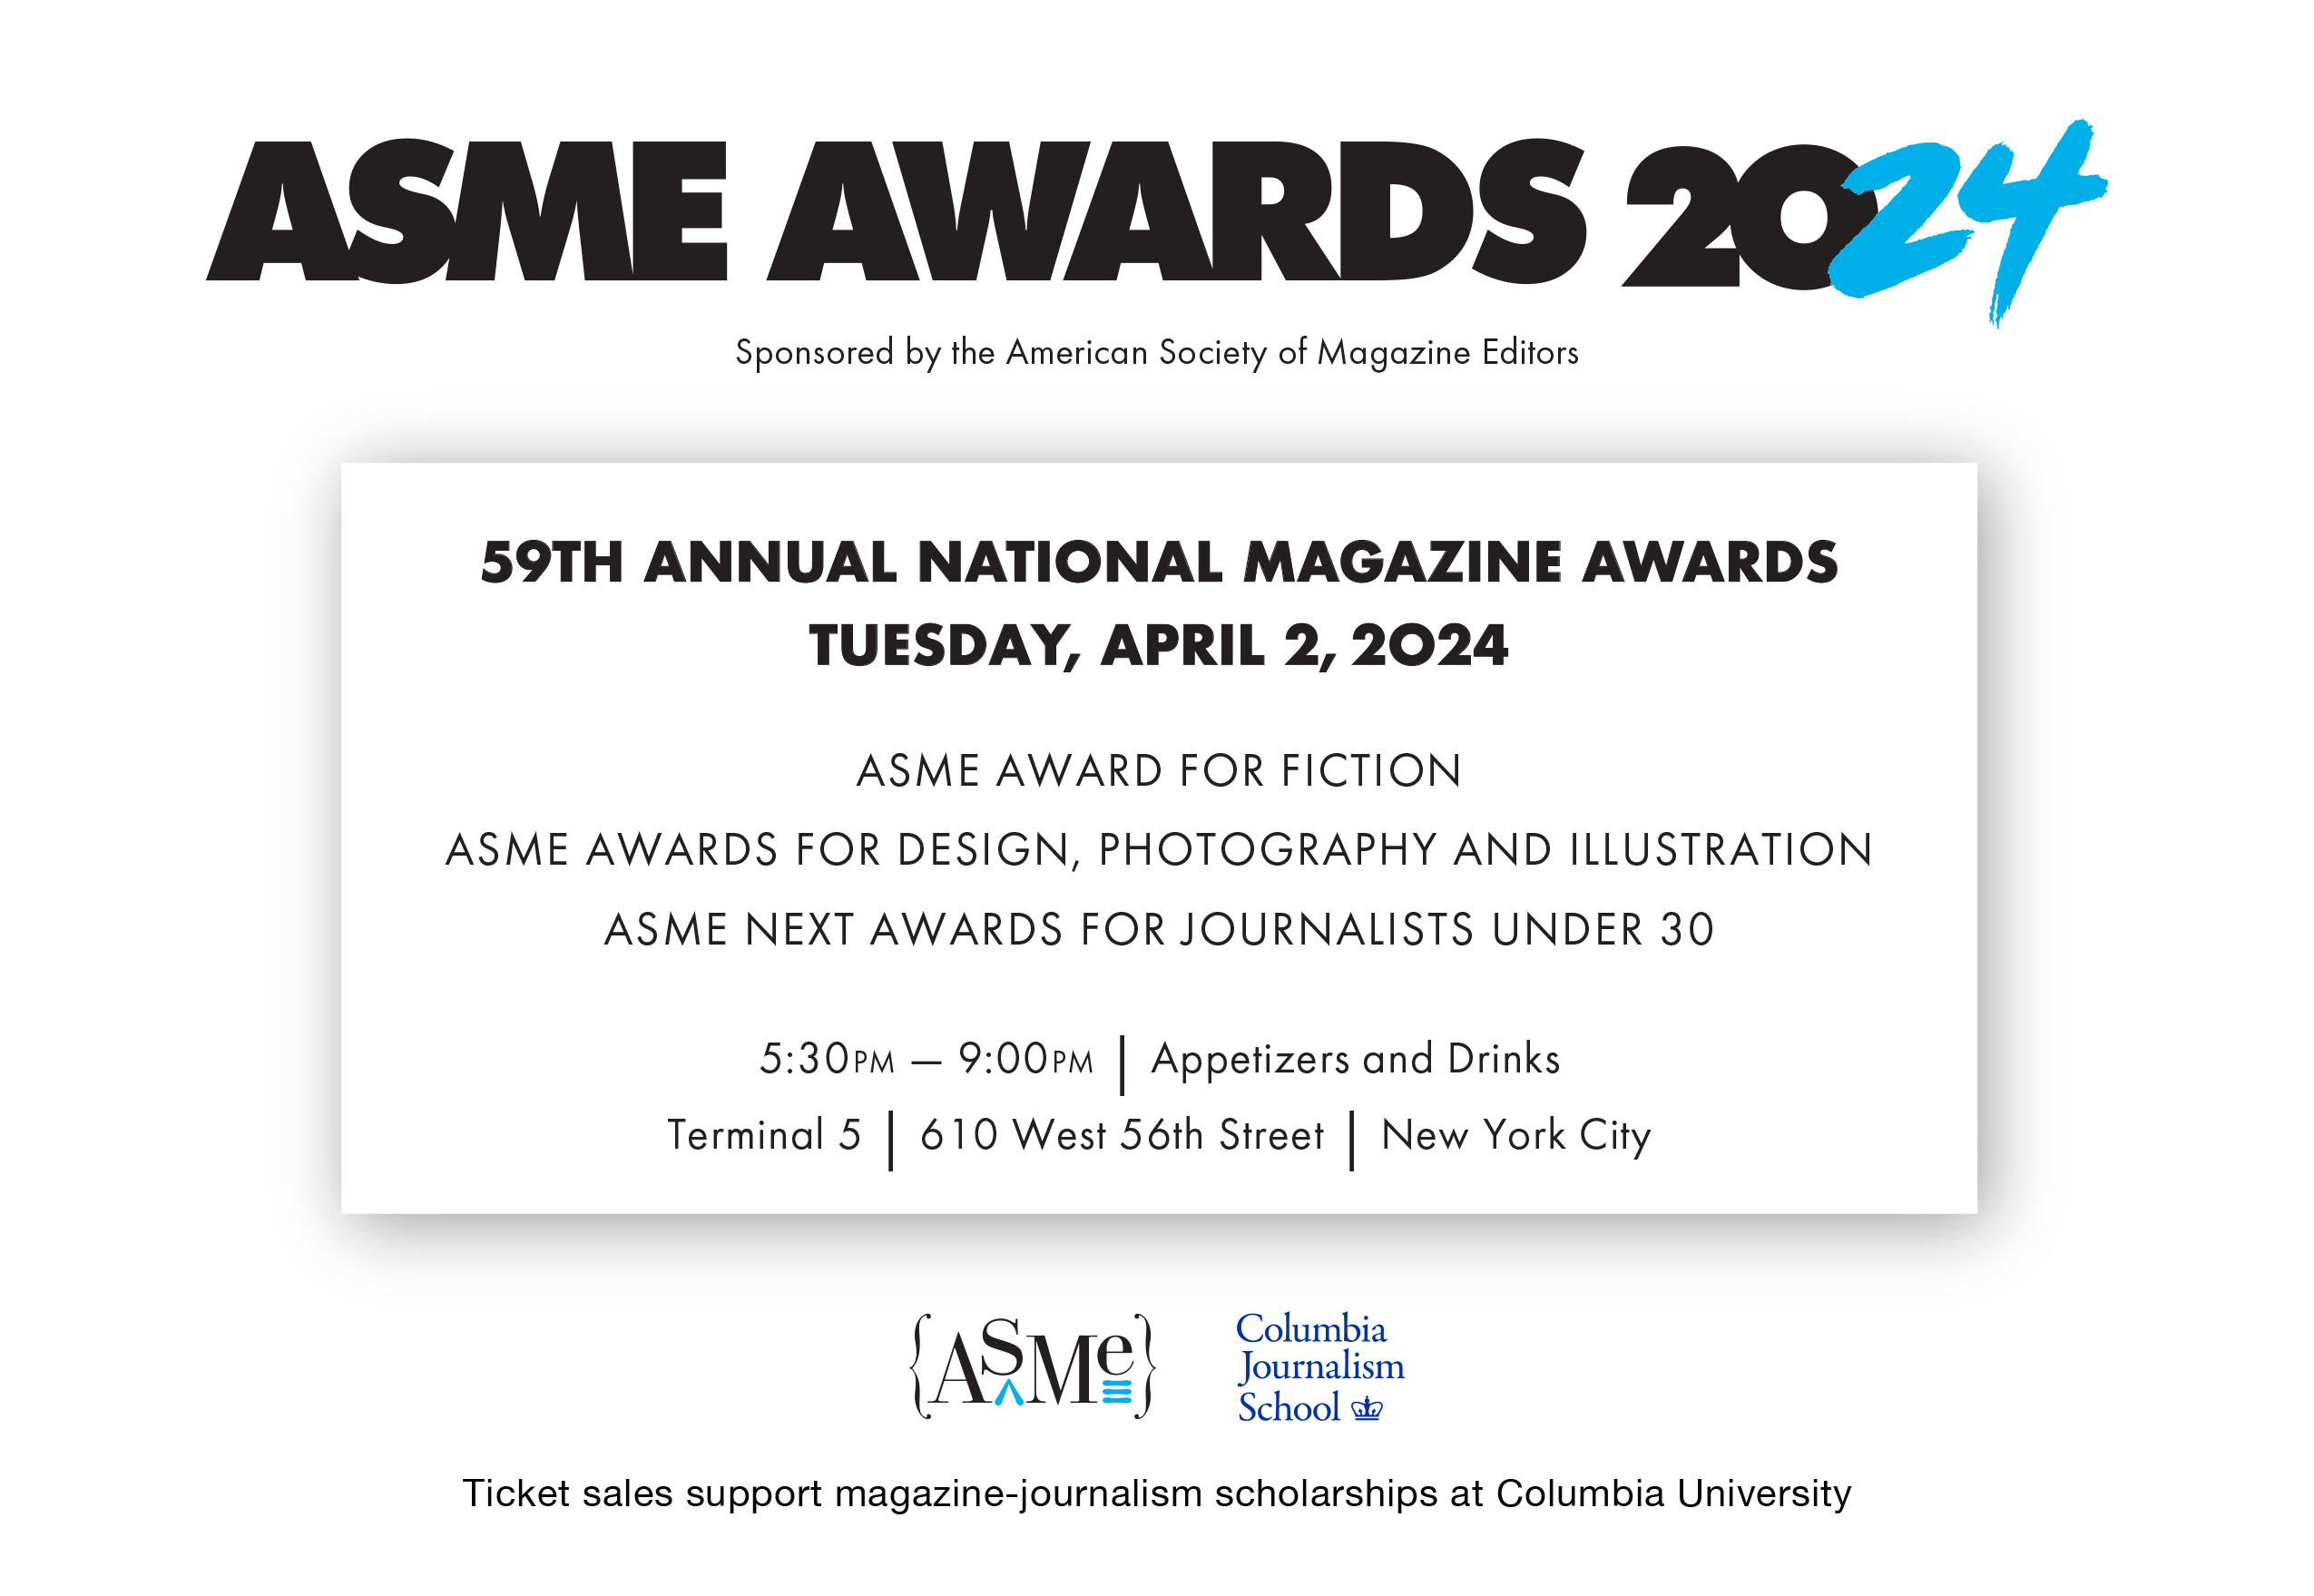 ASME Awards 2024 RSVP